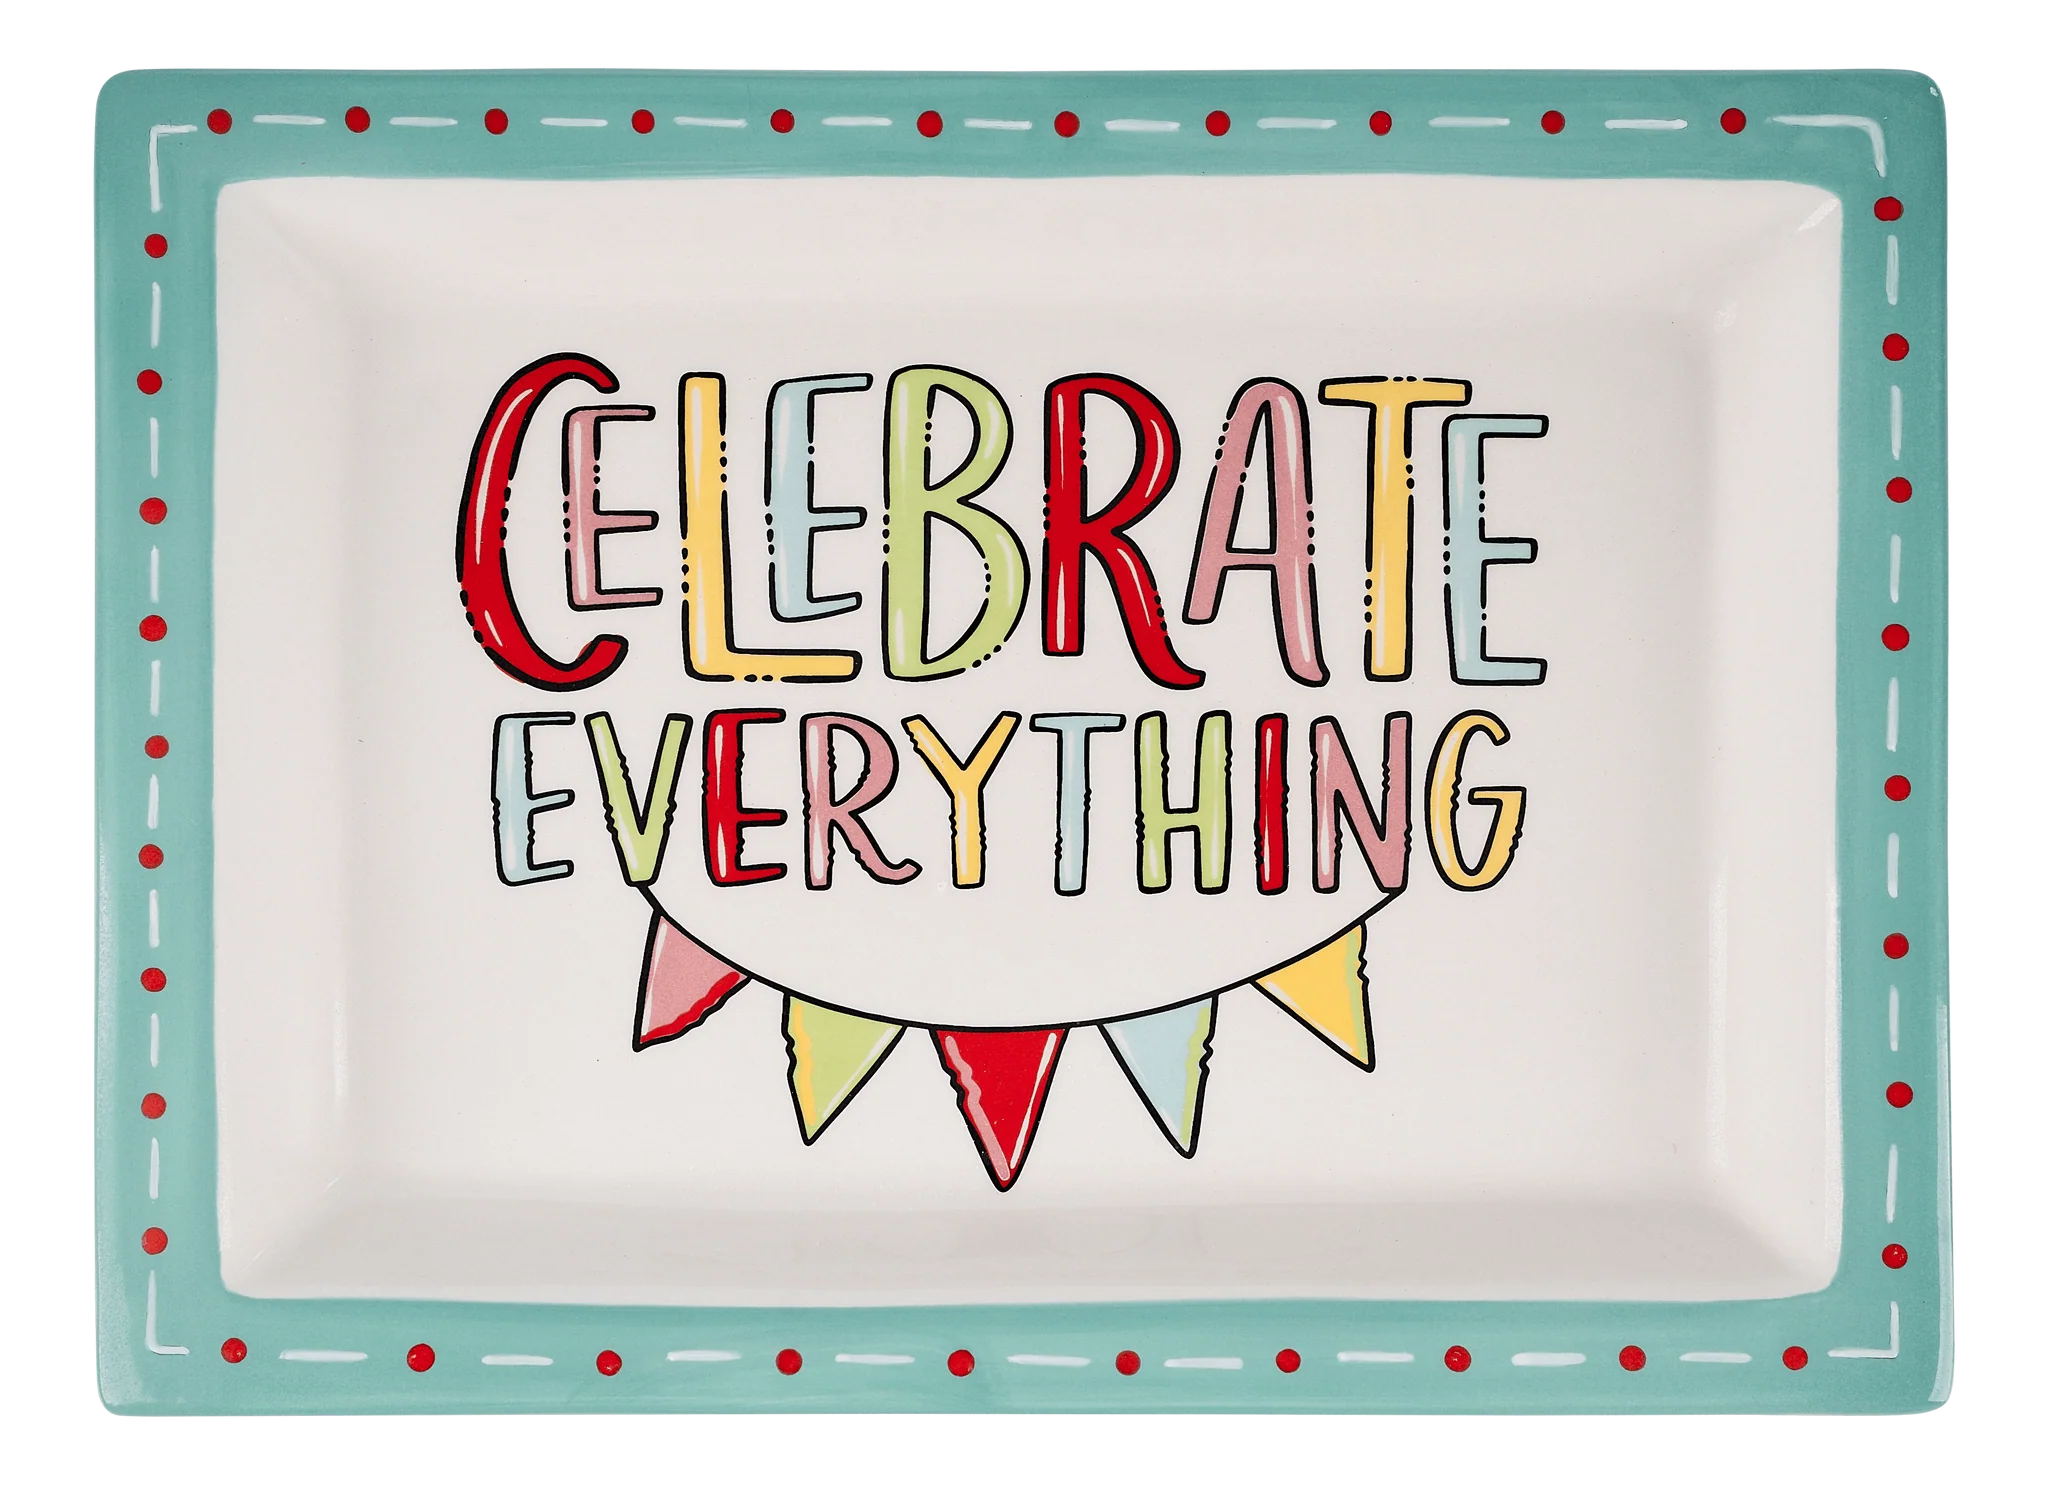 Celebrate Everything Trinket Tray